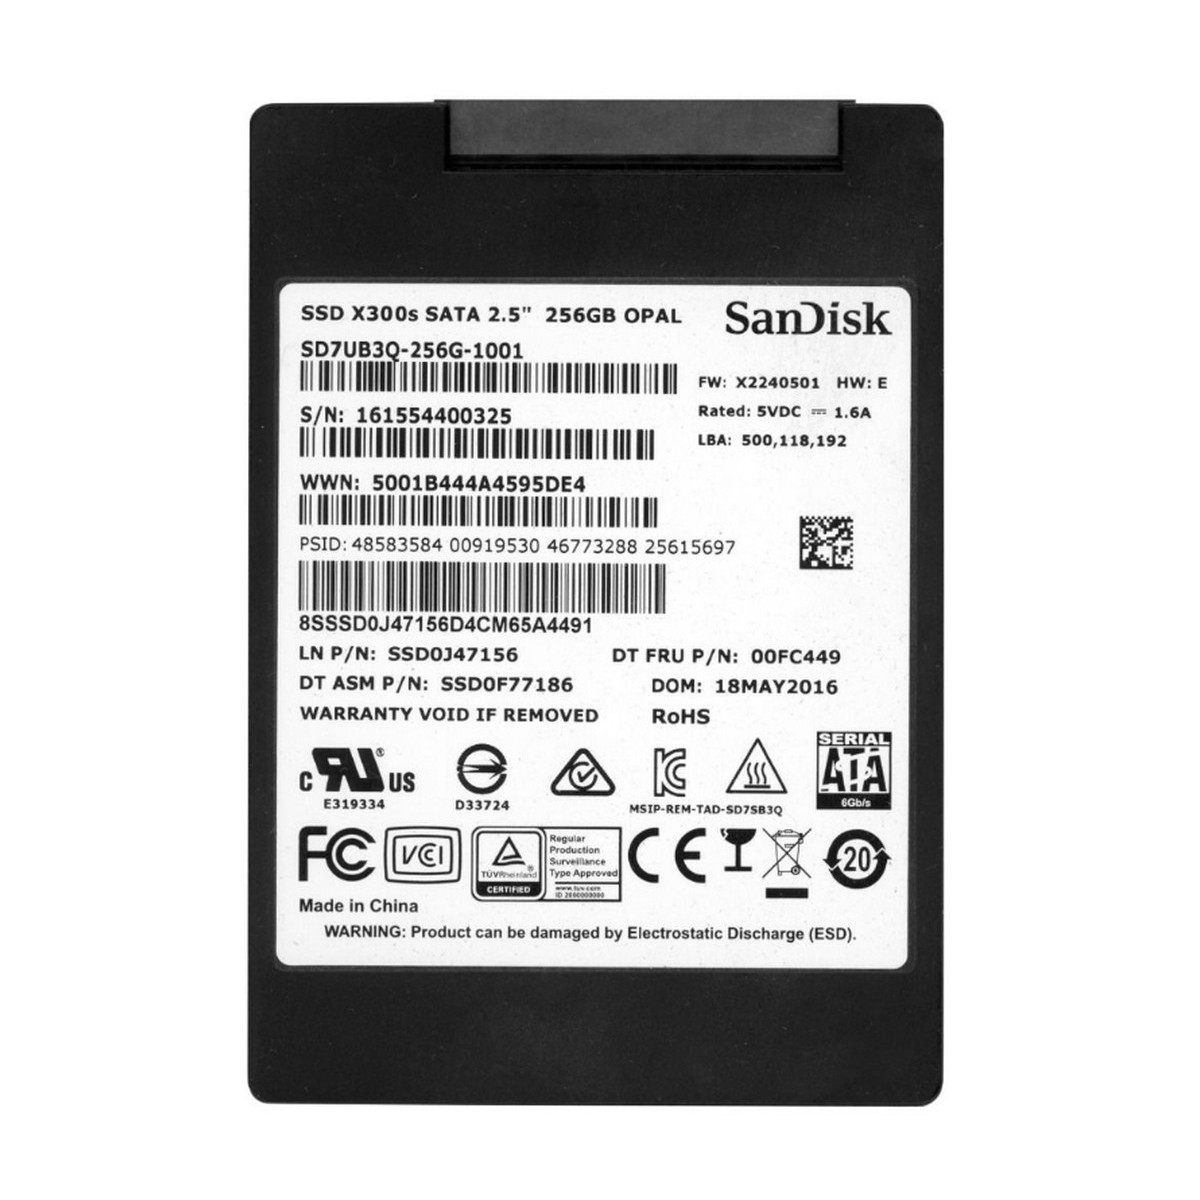 SANDISK SSD 256GB X300s SATA 2,5 SD7UB3Q-256G